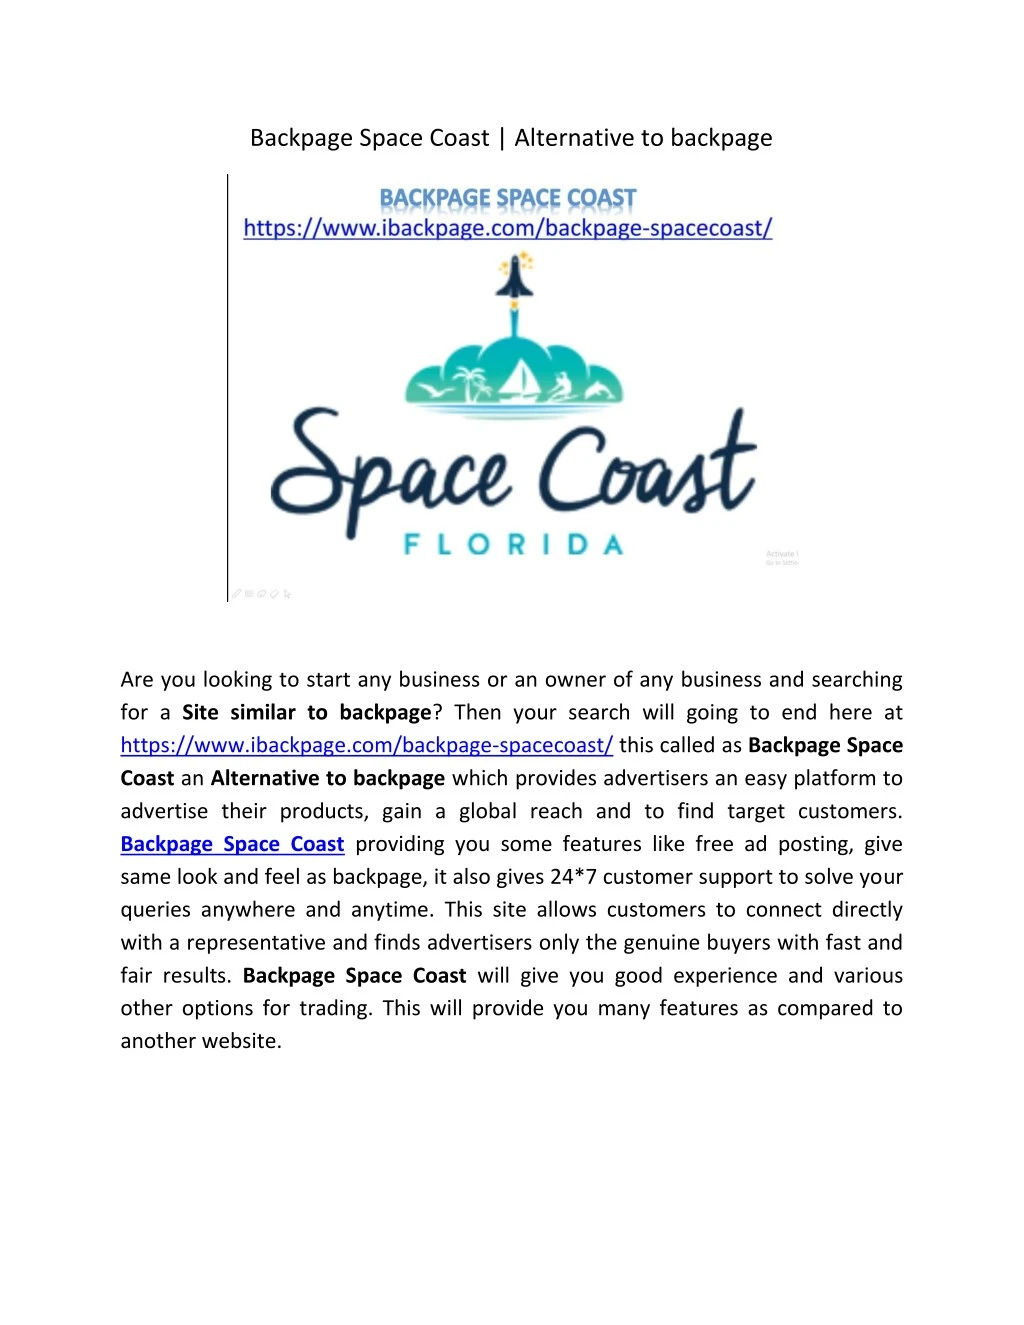 backpage space coast alternative to backpage